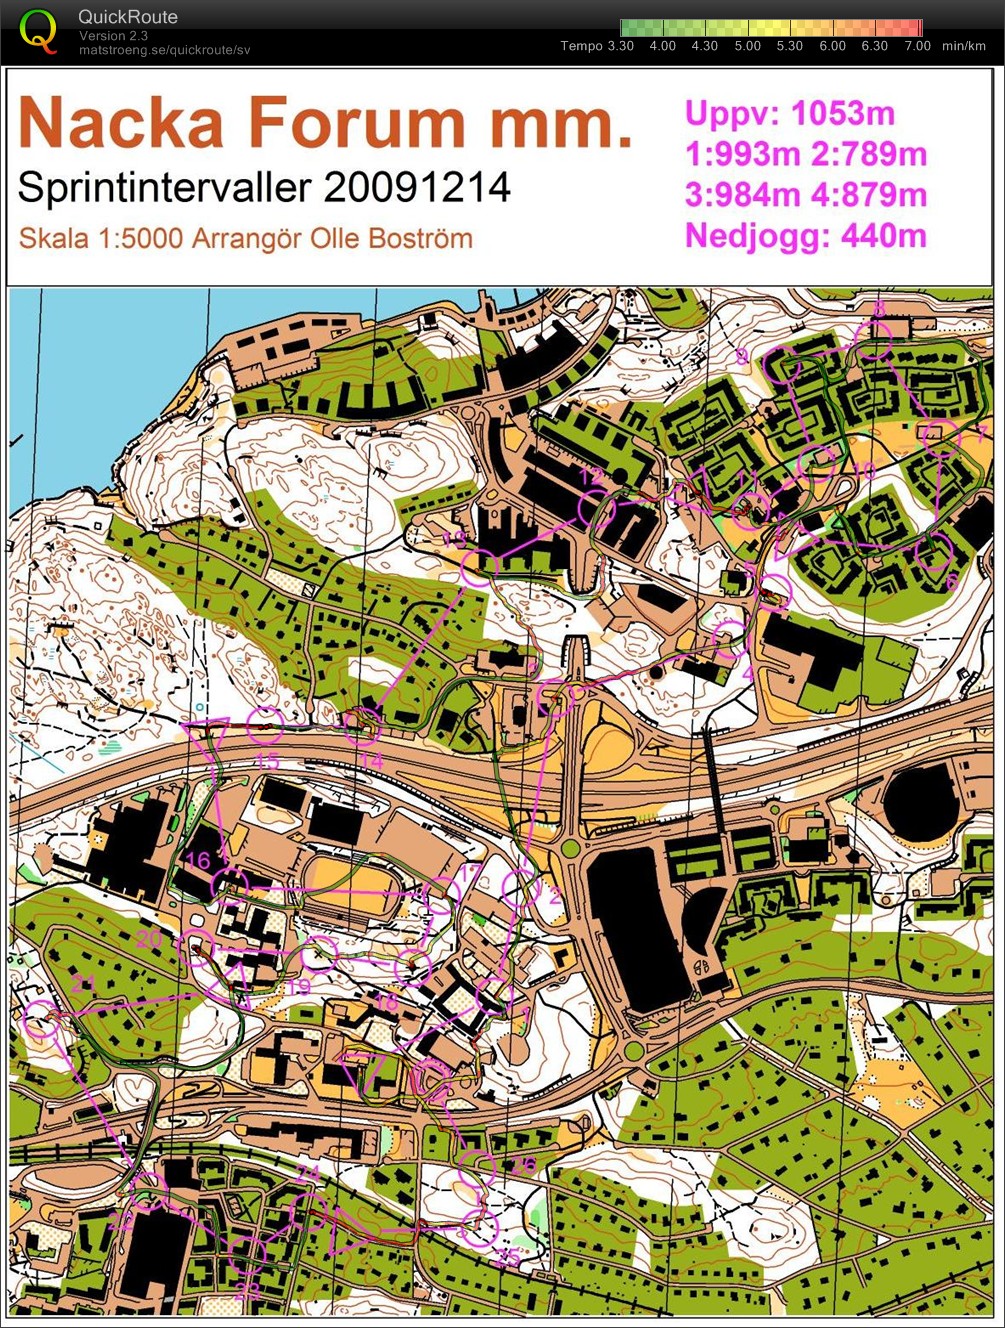 Sprintintervaller Järlahallen (14.12.2009)